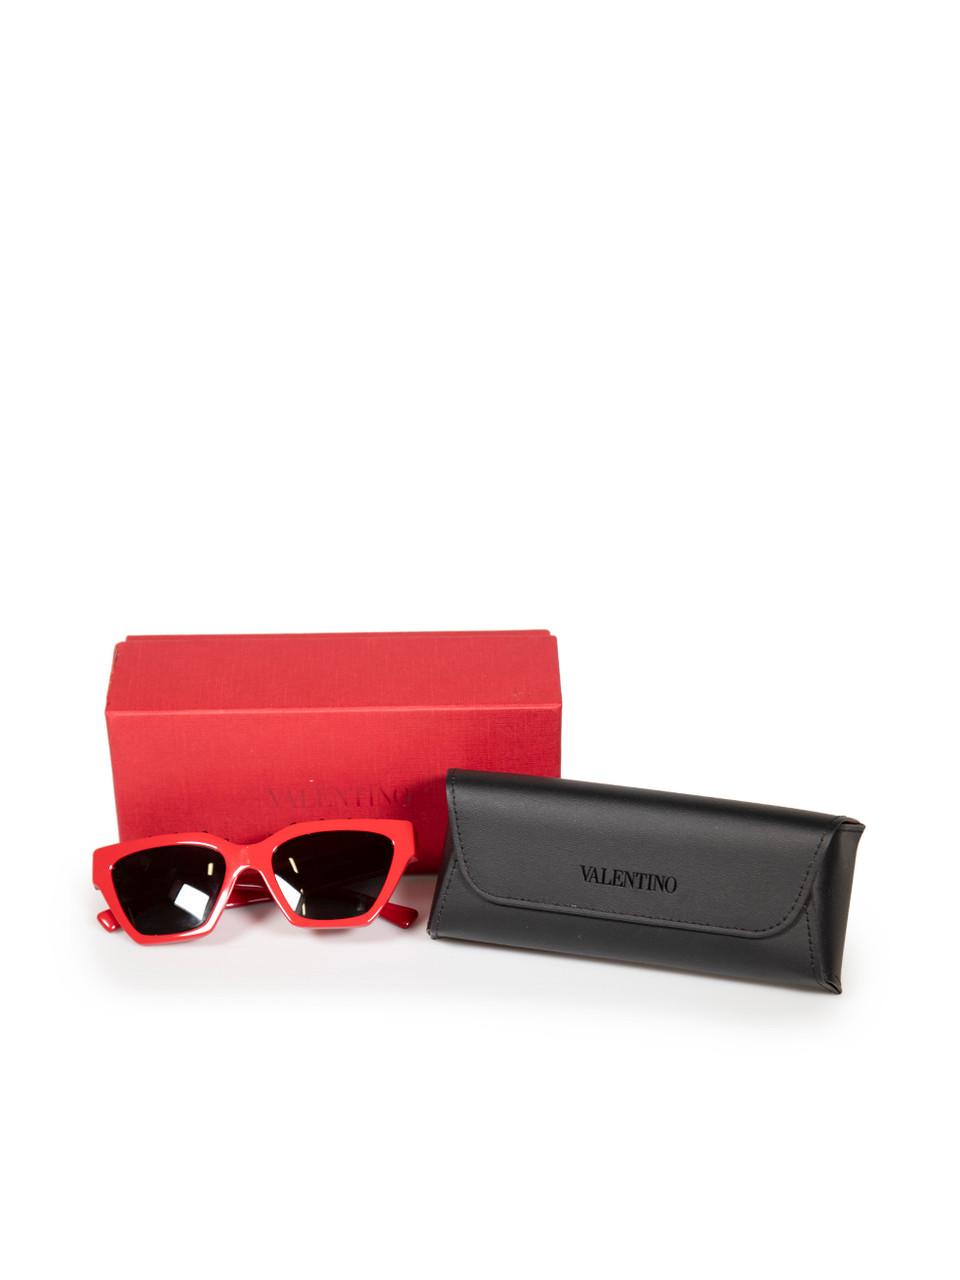 Valentino Red Rockstud Sunglasses